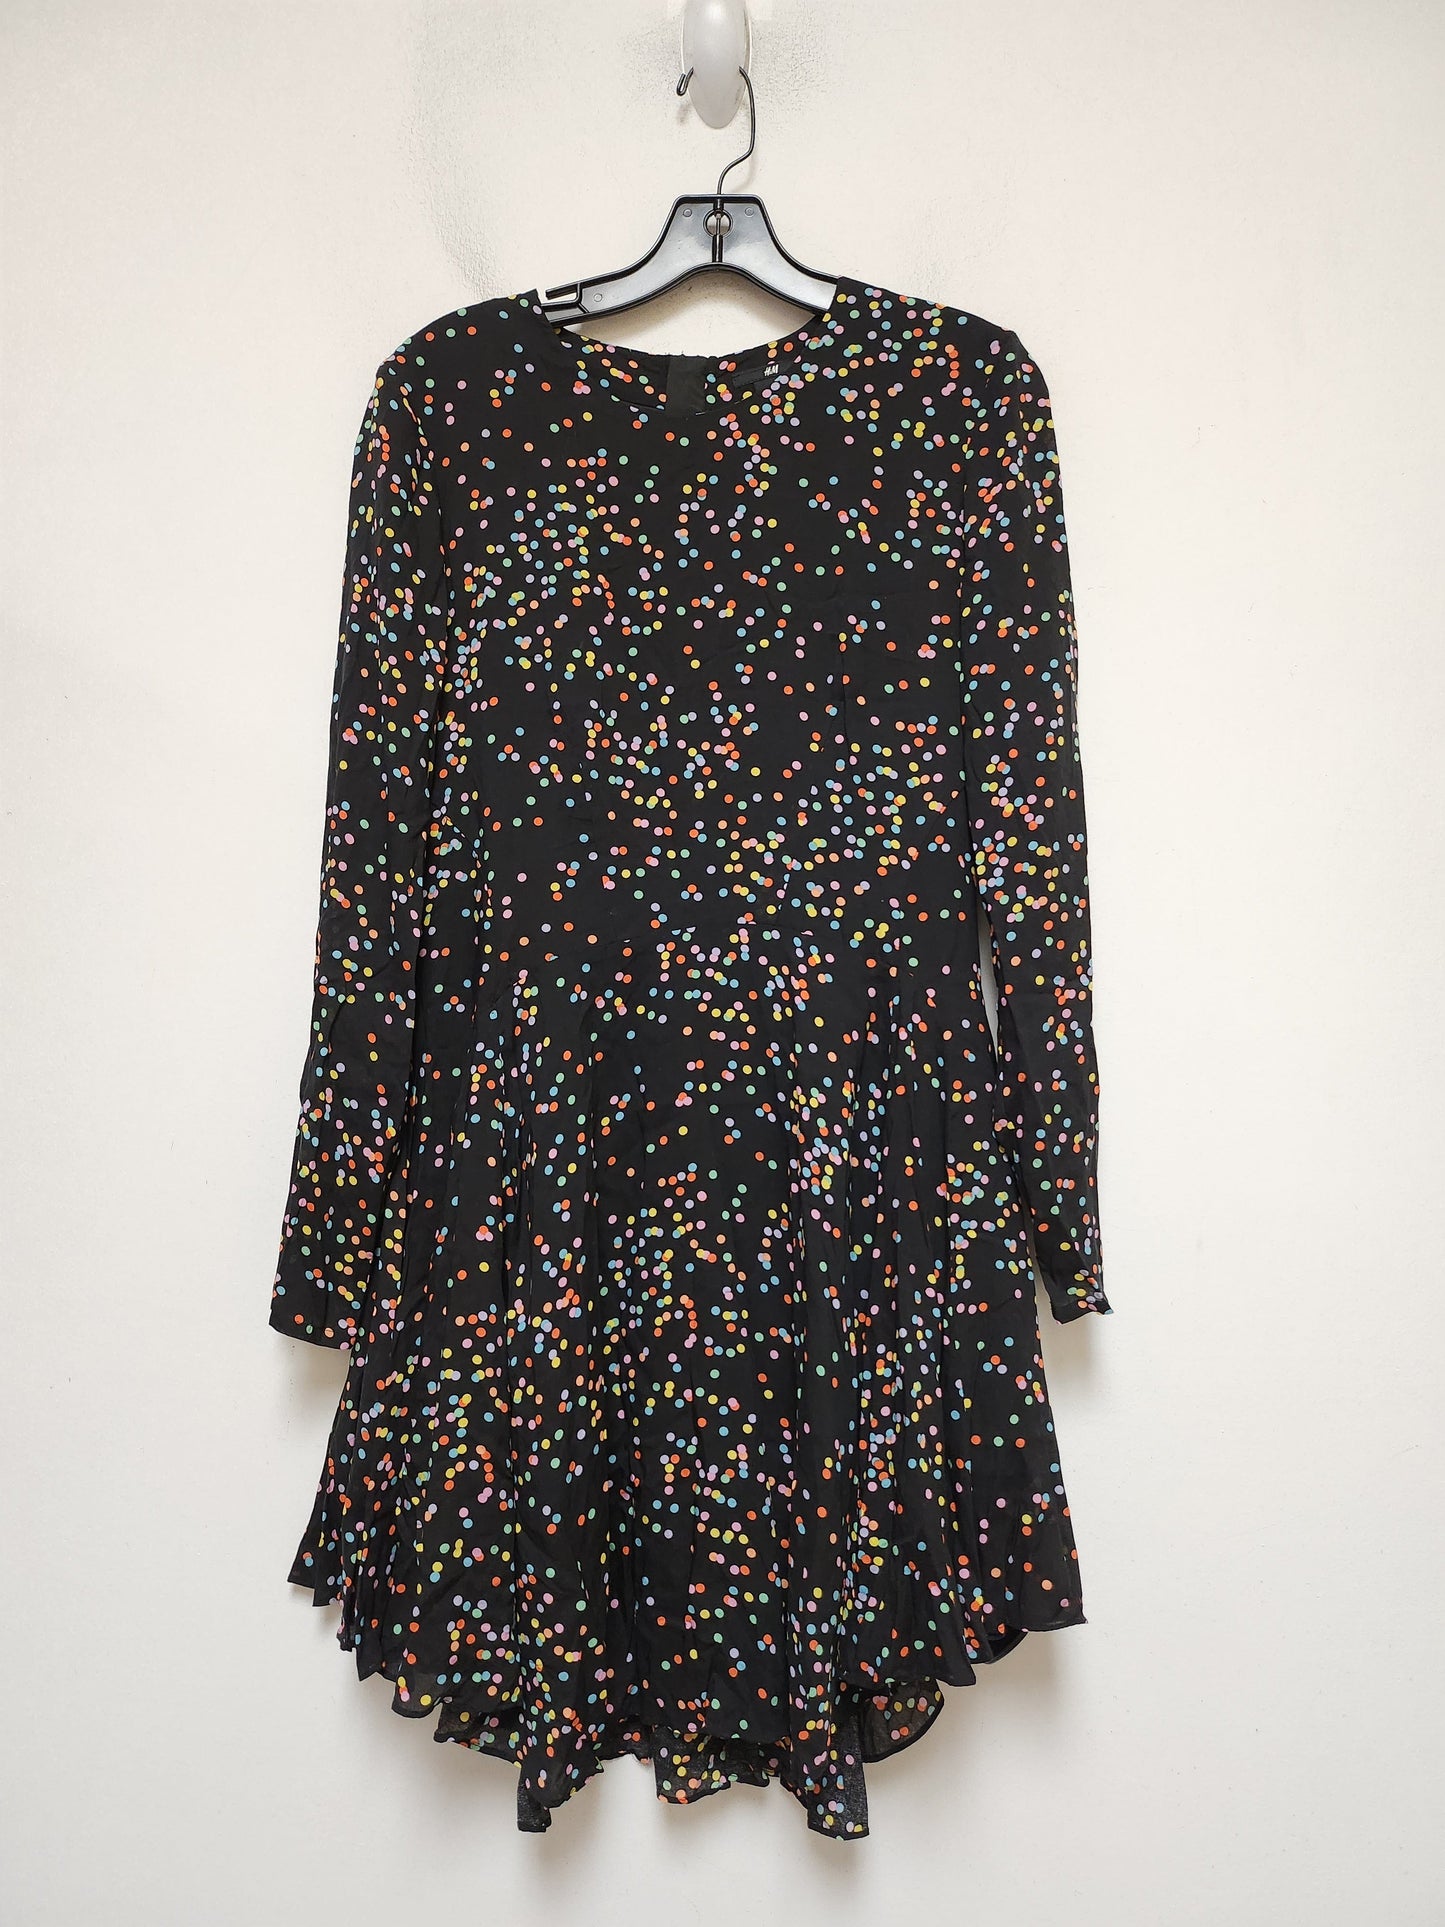 Polkadot Pattern Dress Casual Short H&m, Size L